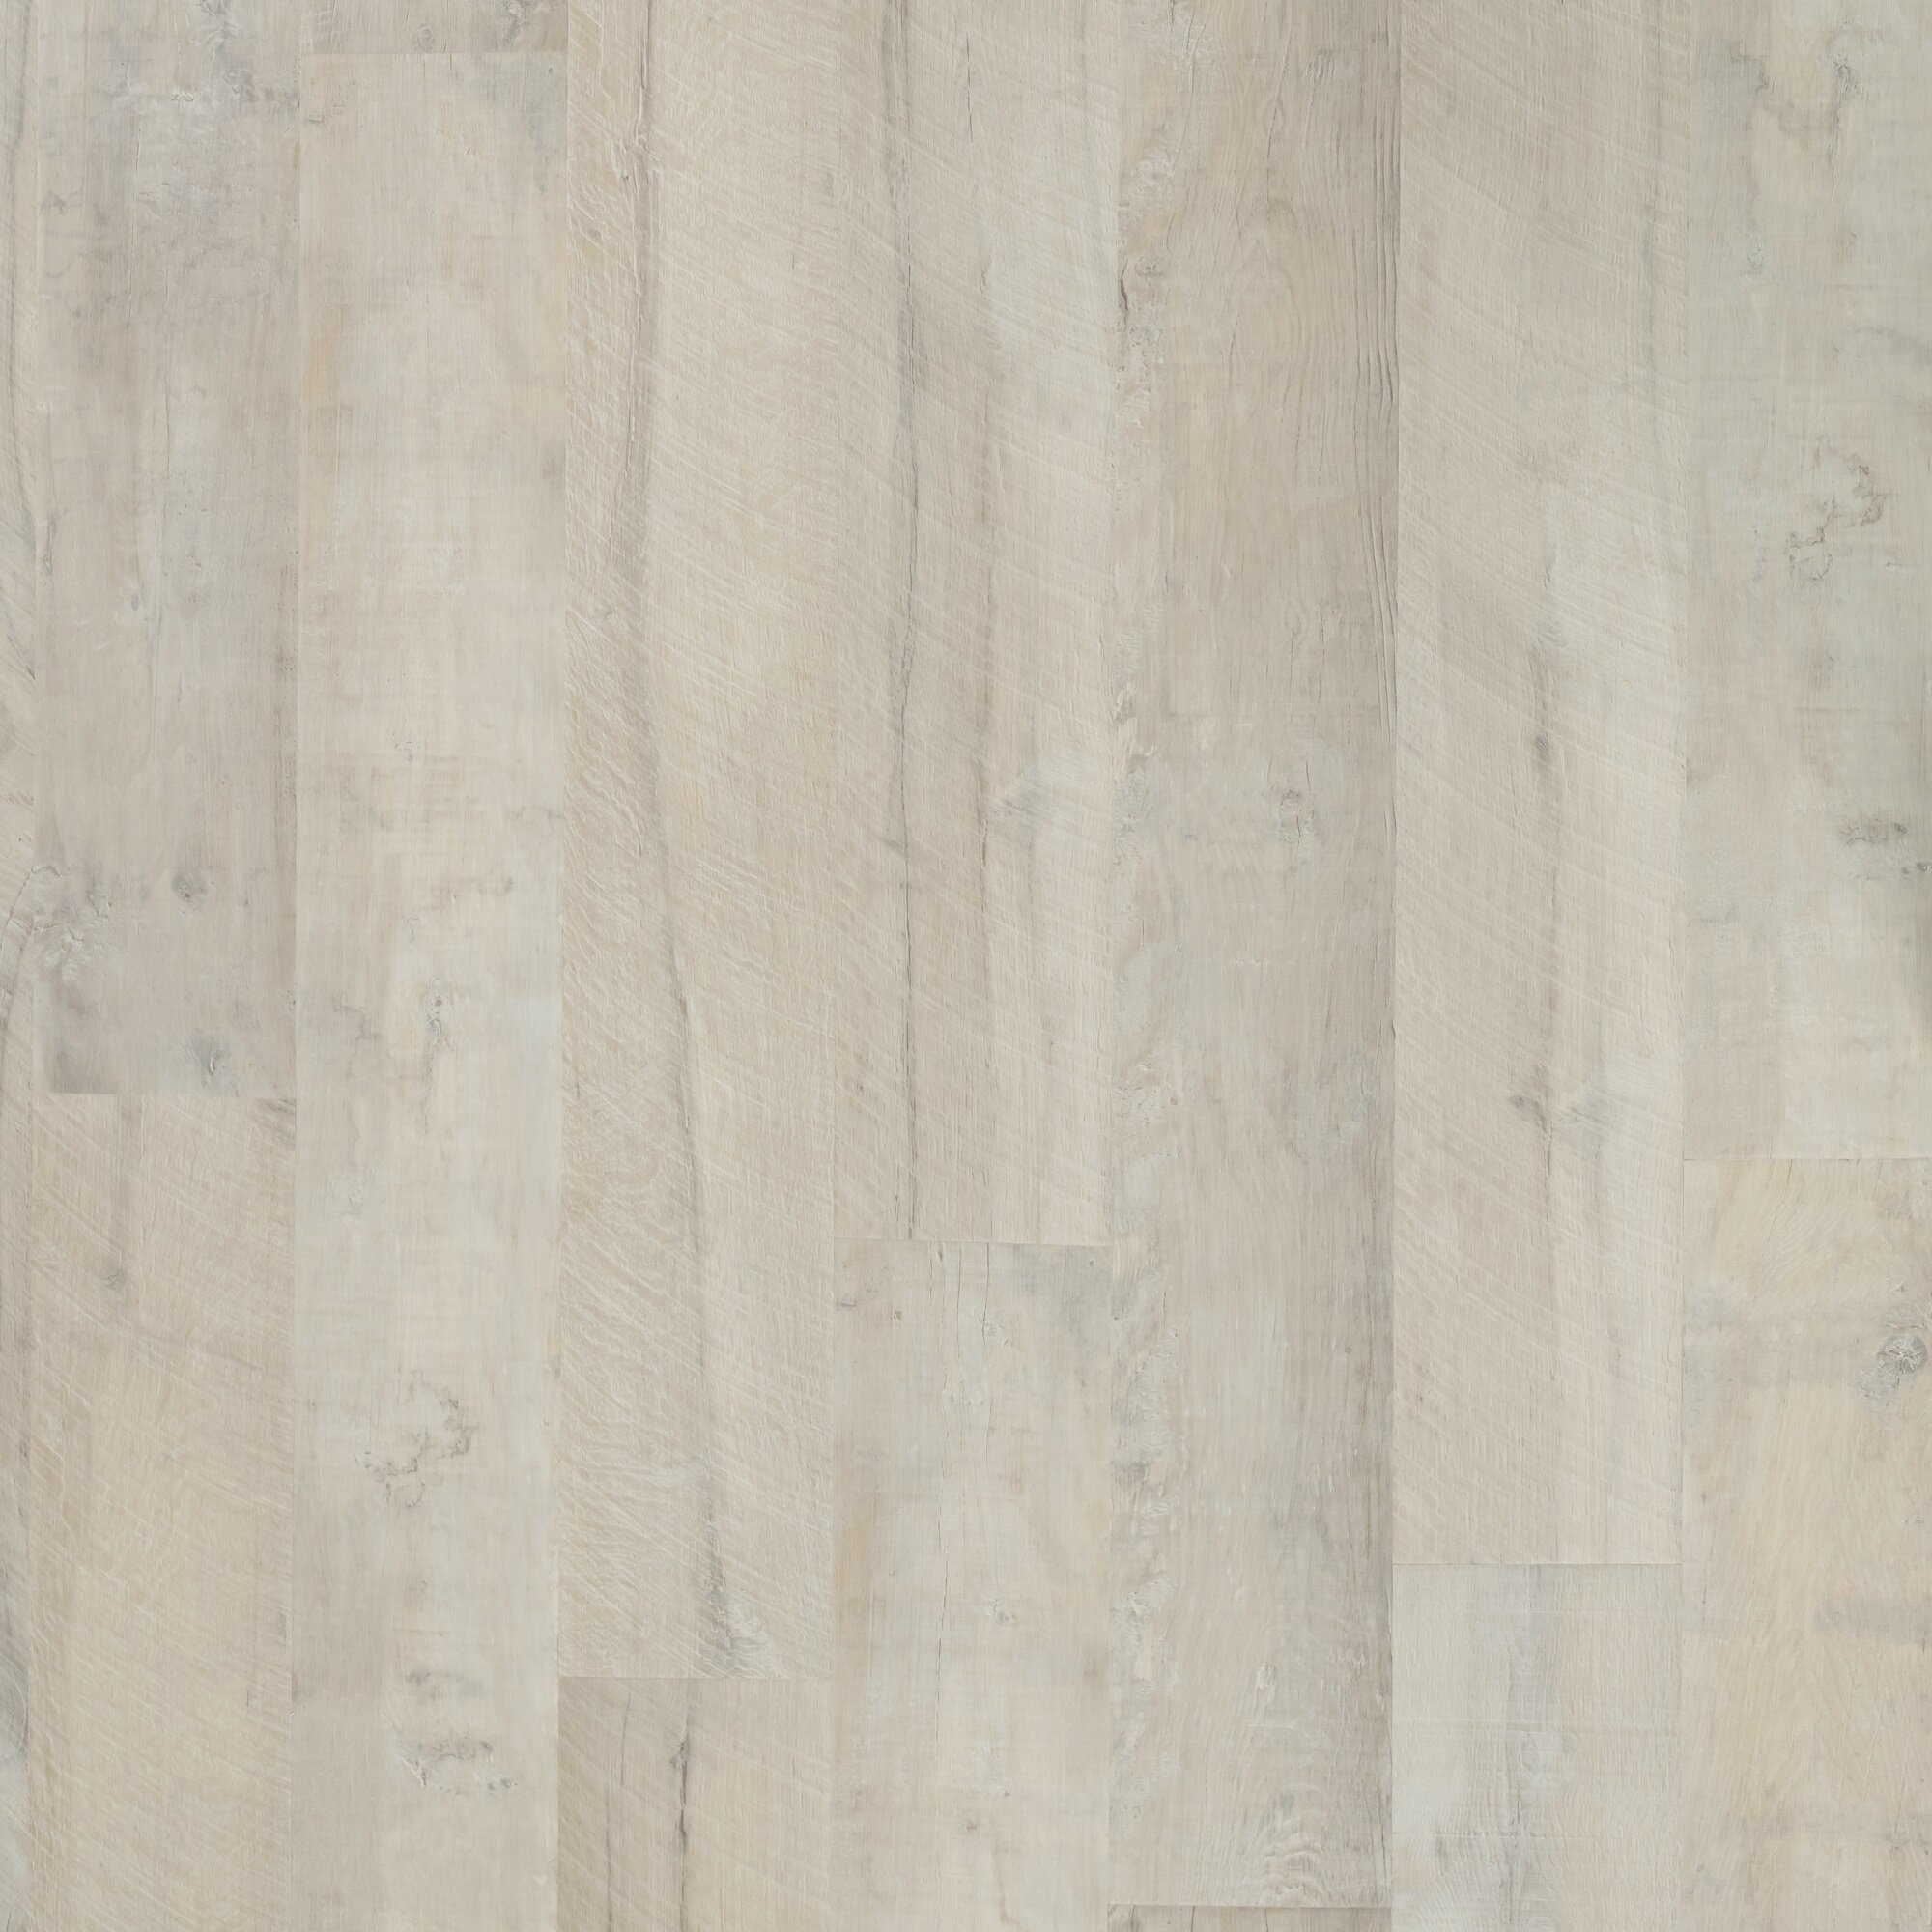 Pergo Pro 7" x 47" x 12mm Laminate Flooring & Reviews | Wayfair